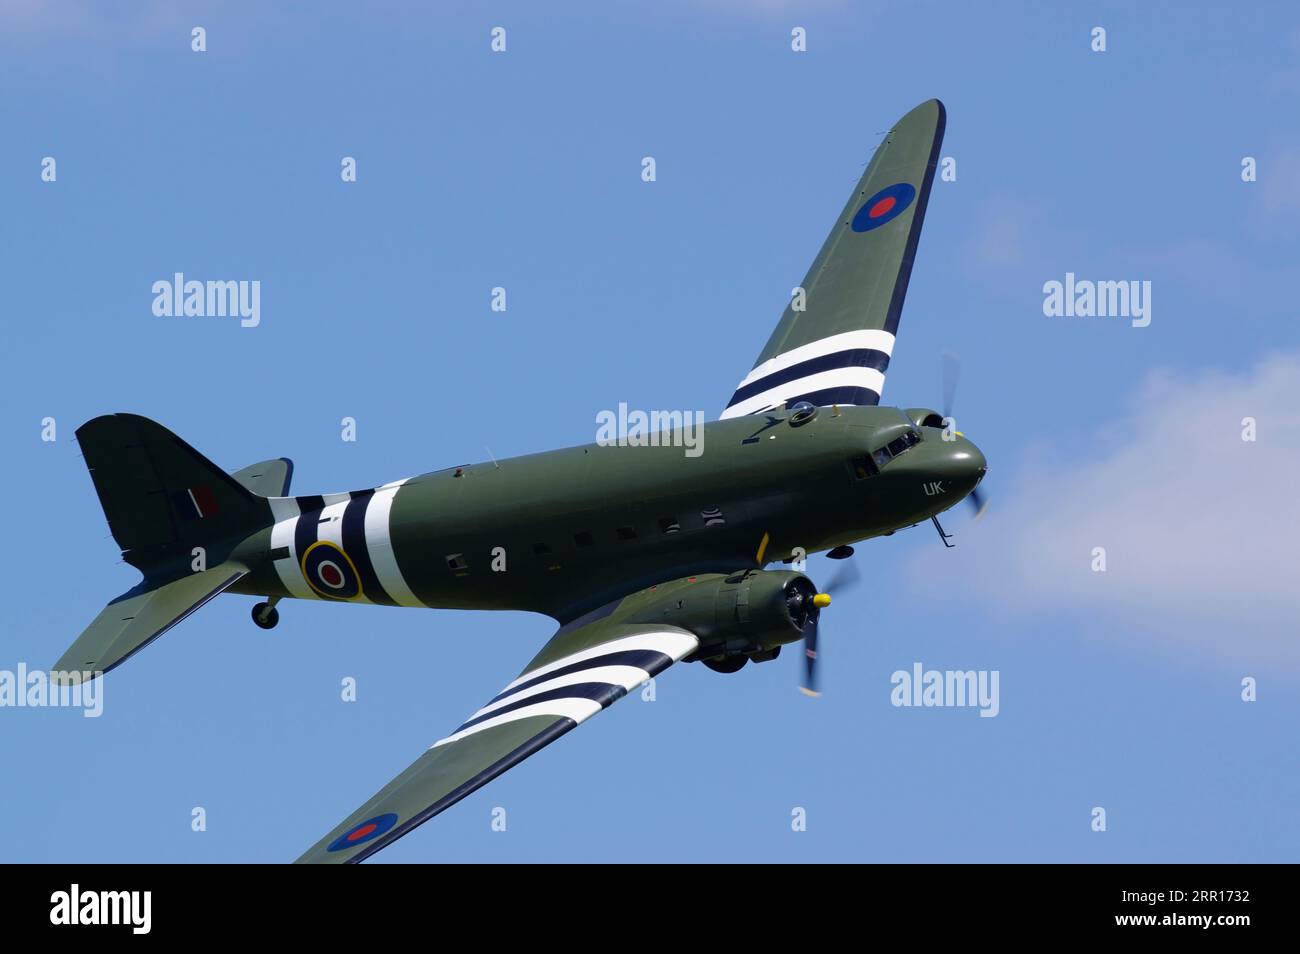 Douglas DC-3 Dakota, ZA947, Battle of Britain Memorial Flight, Stock Photo